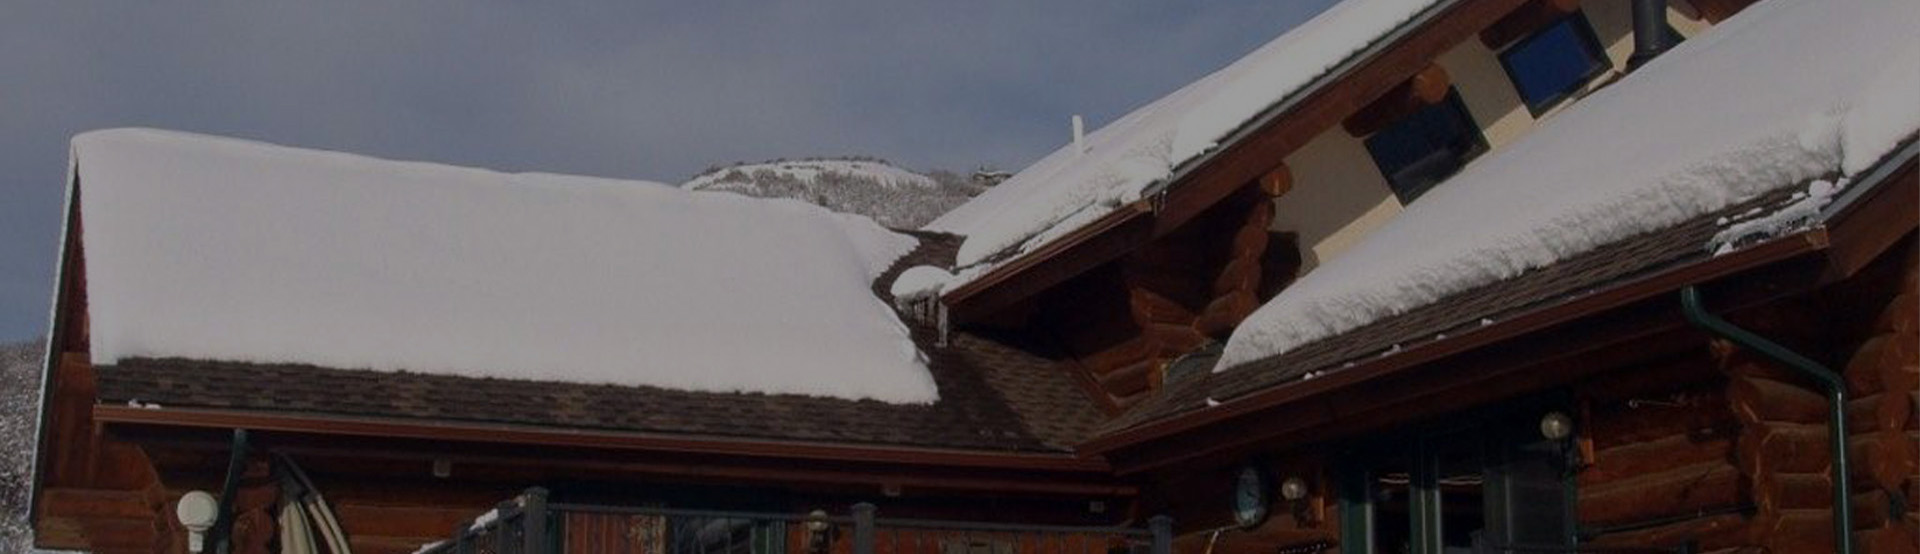 Roof de-icing system benefits banner